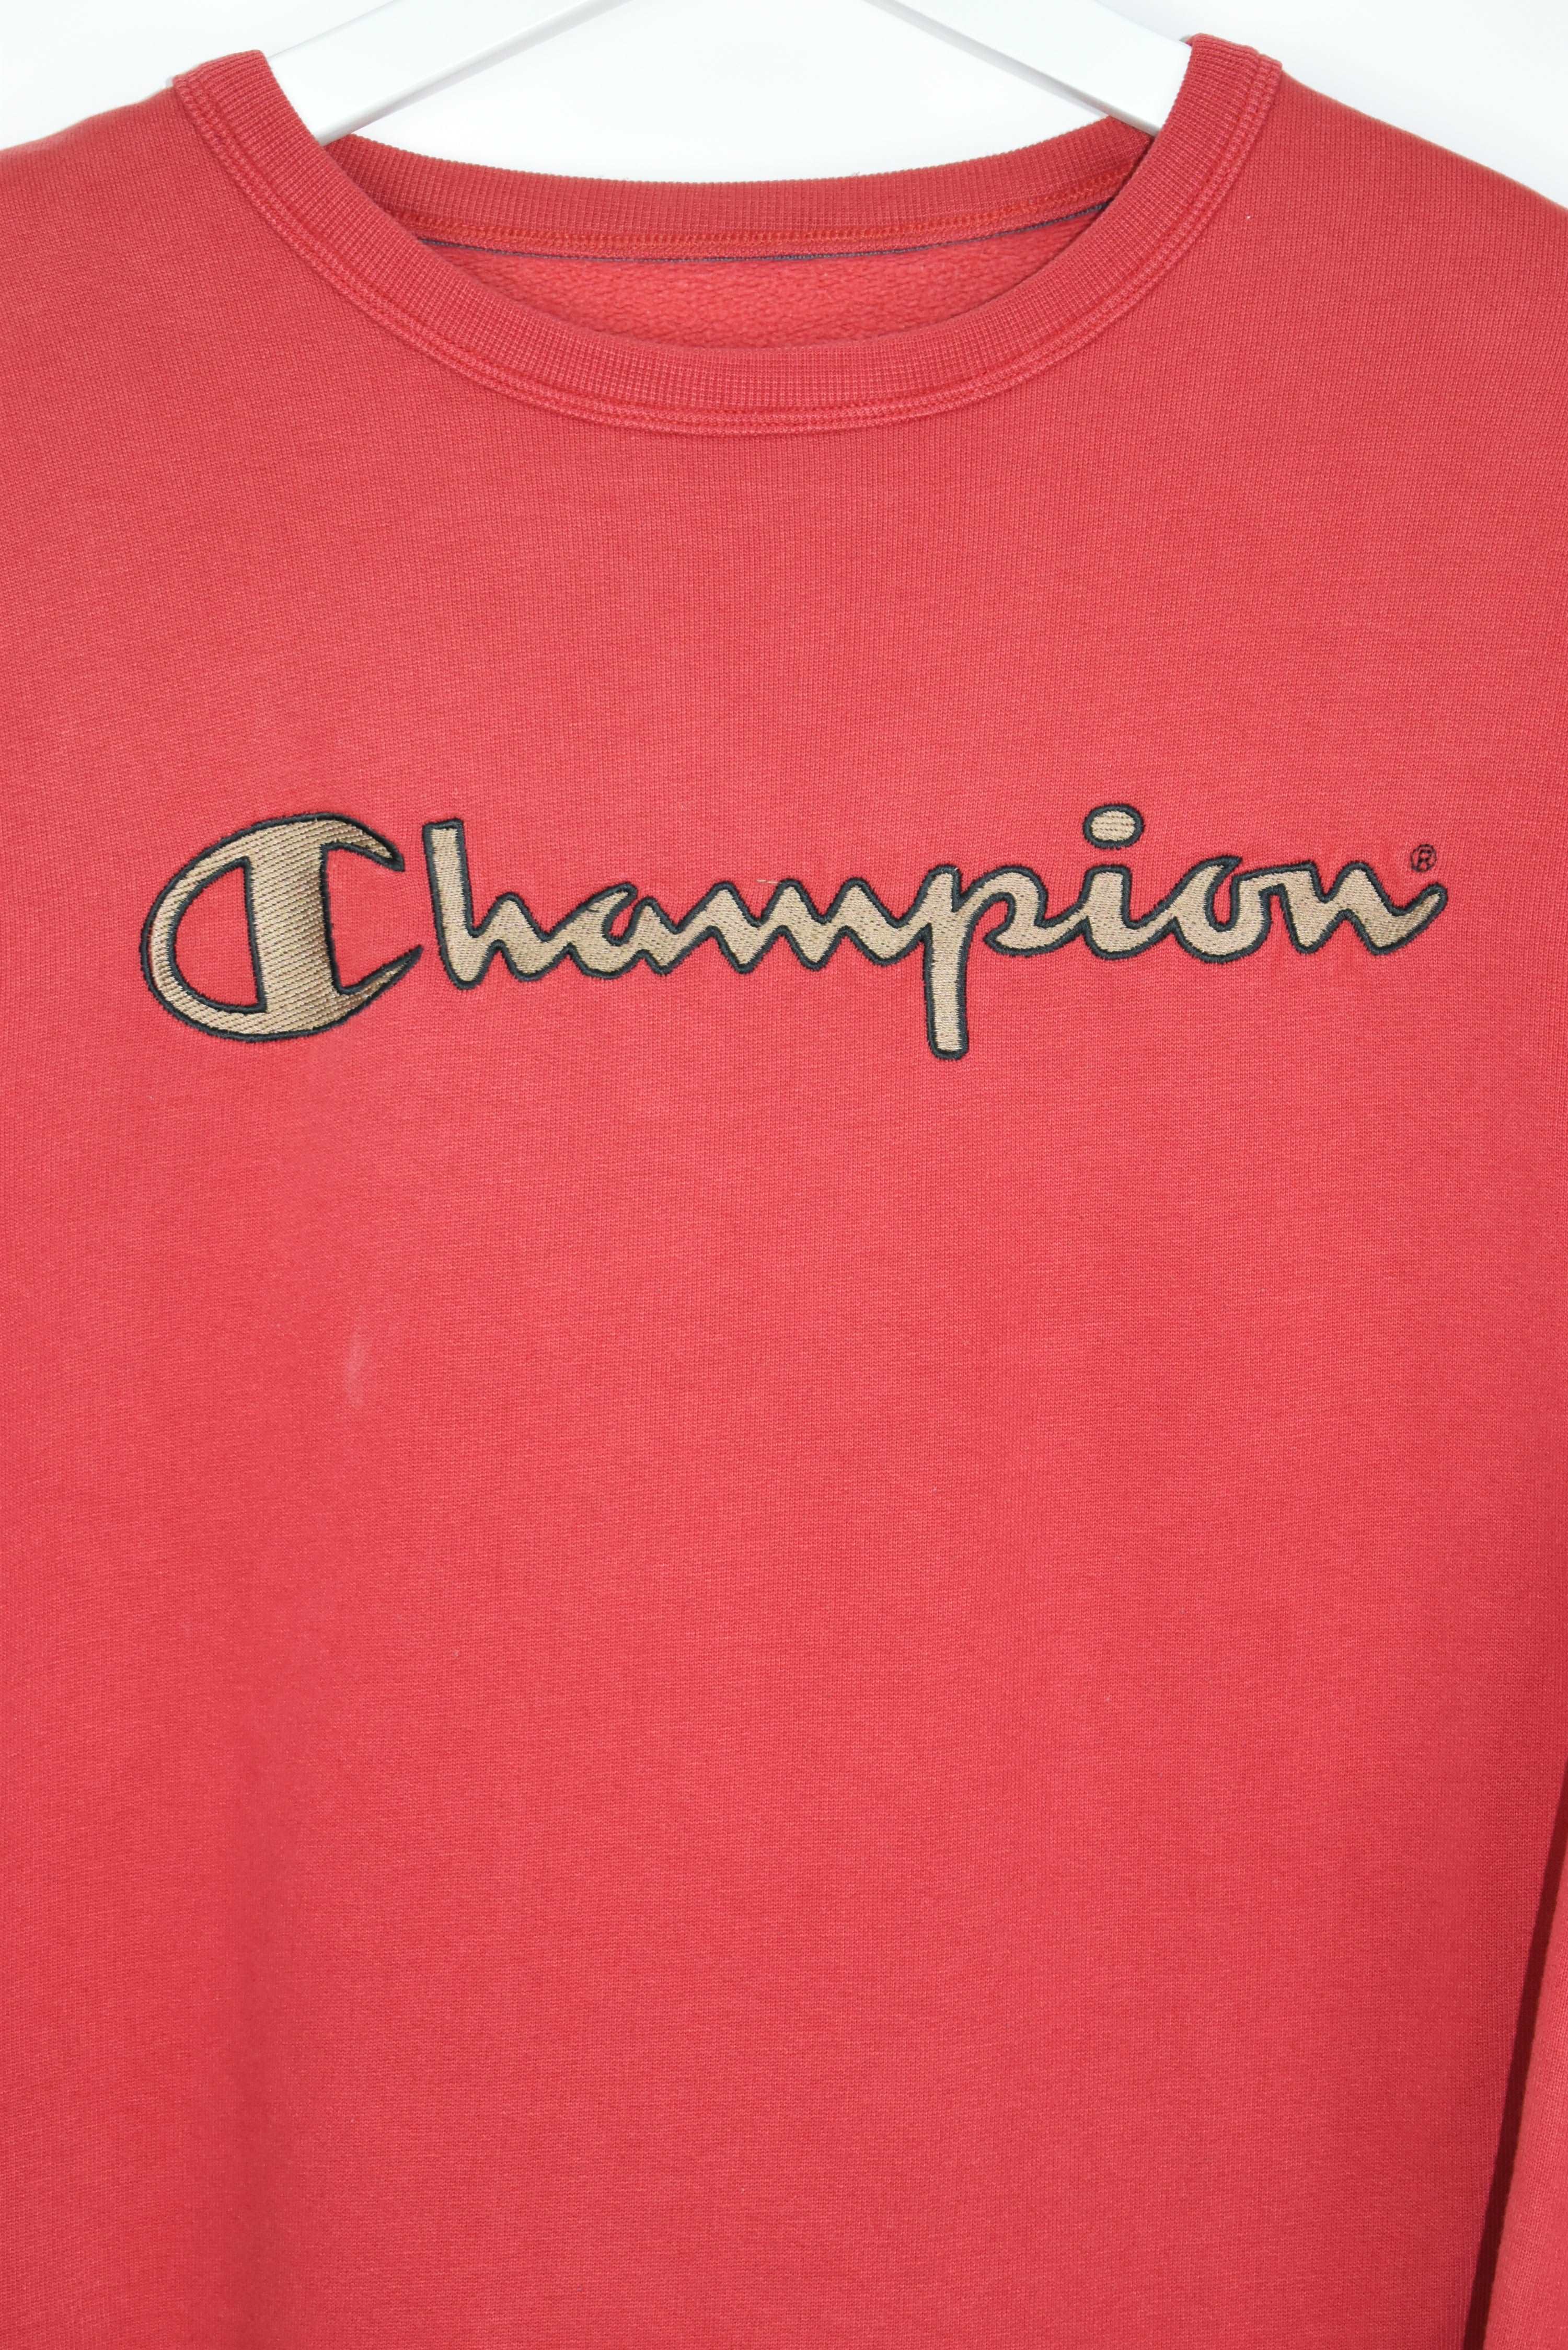 Vintage Champion Embroidered Logo Sweatshirt Small